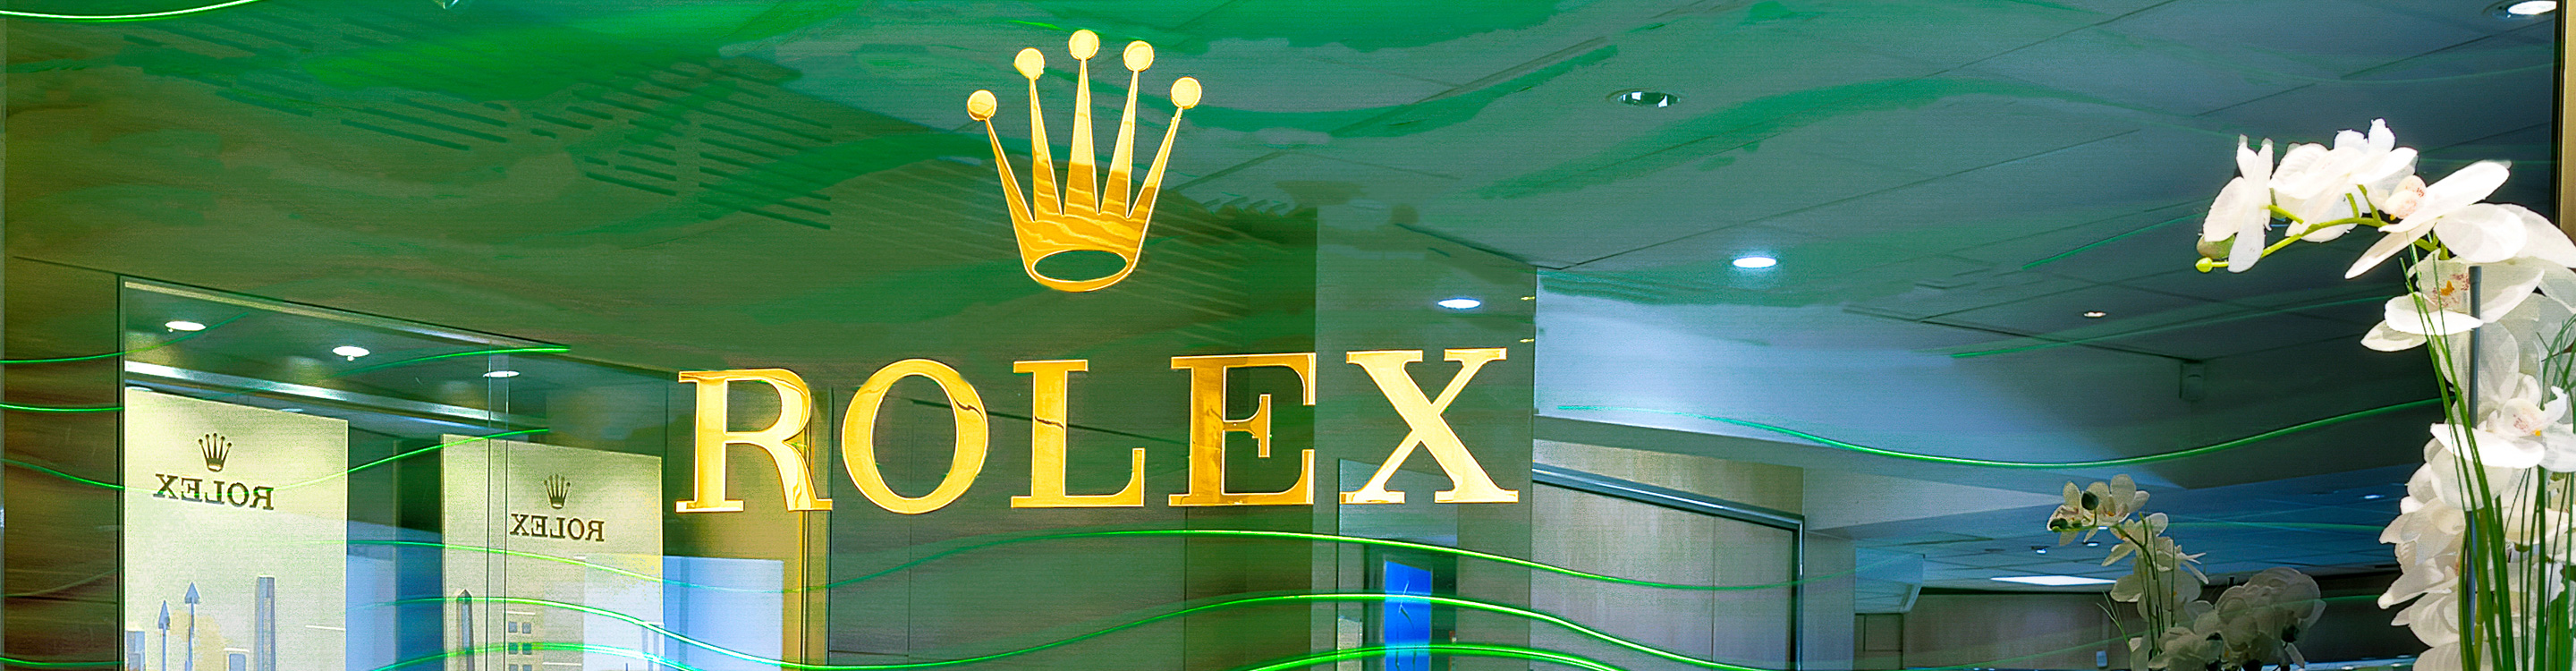 Showroom Rolex chez Goldfinger Saint-Martin